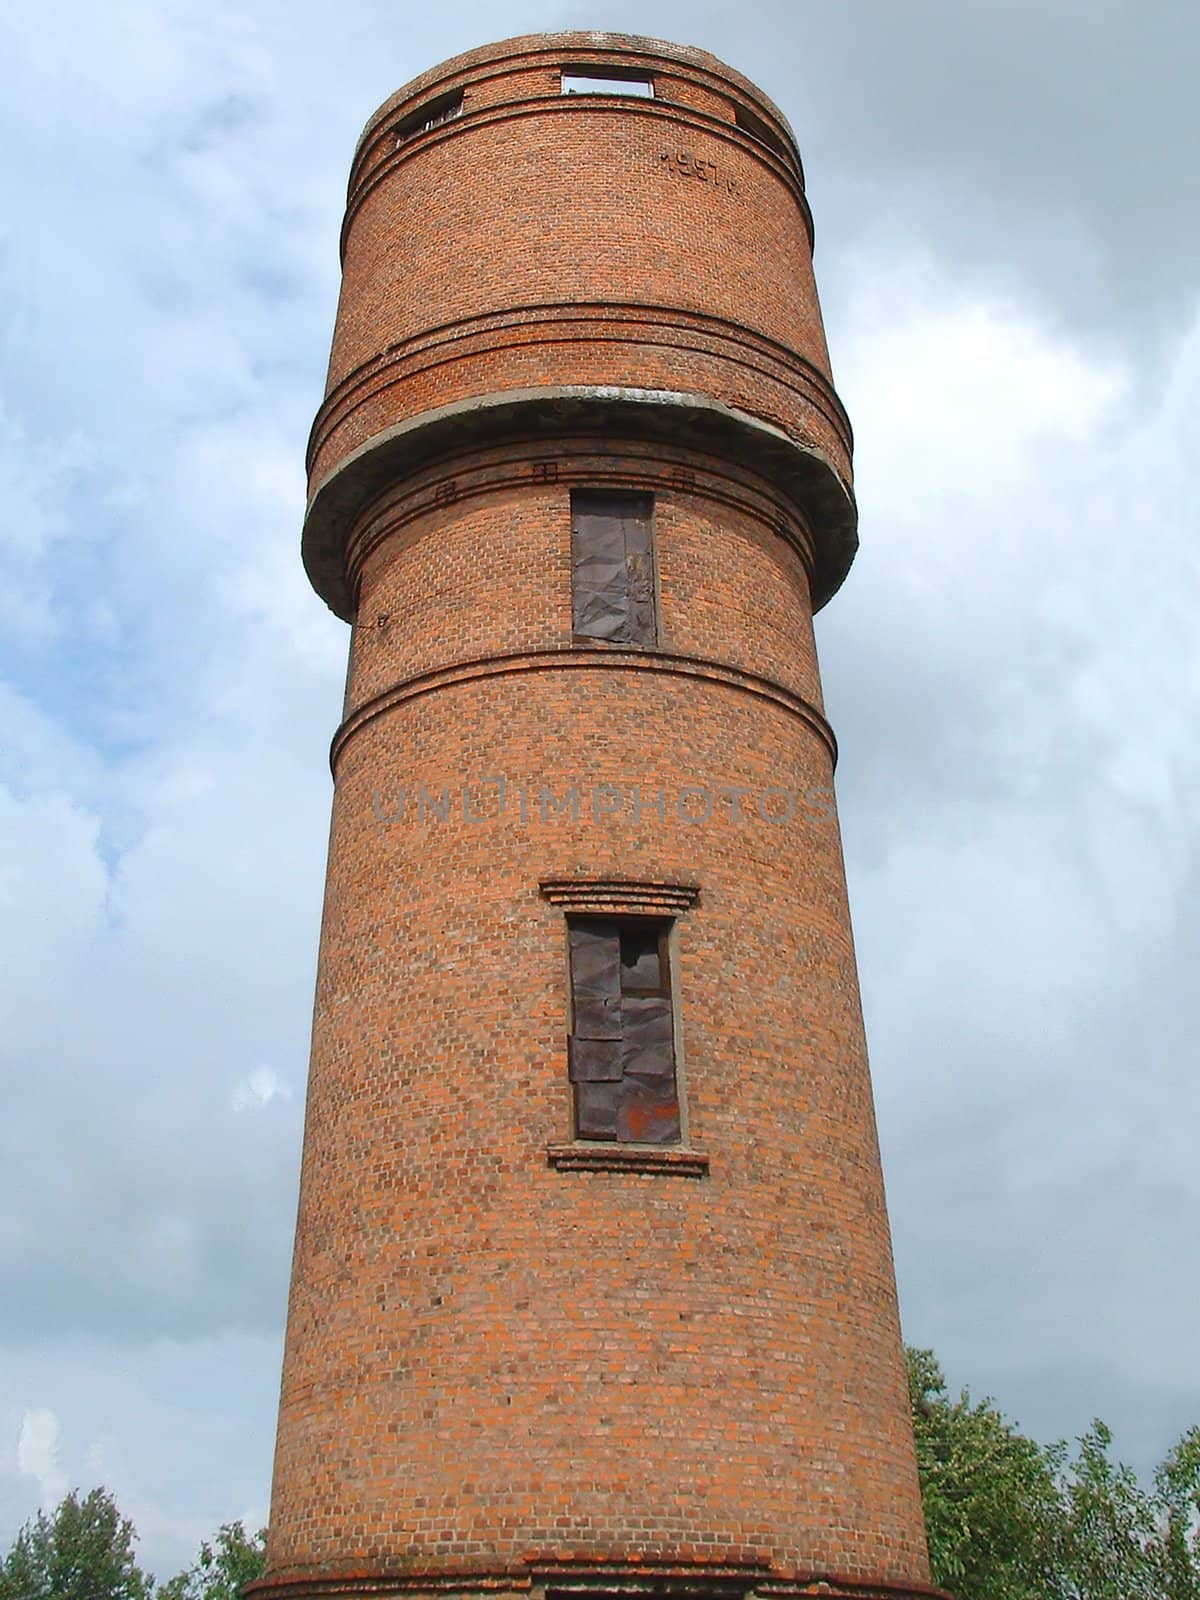  Old tower by myyayko